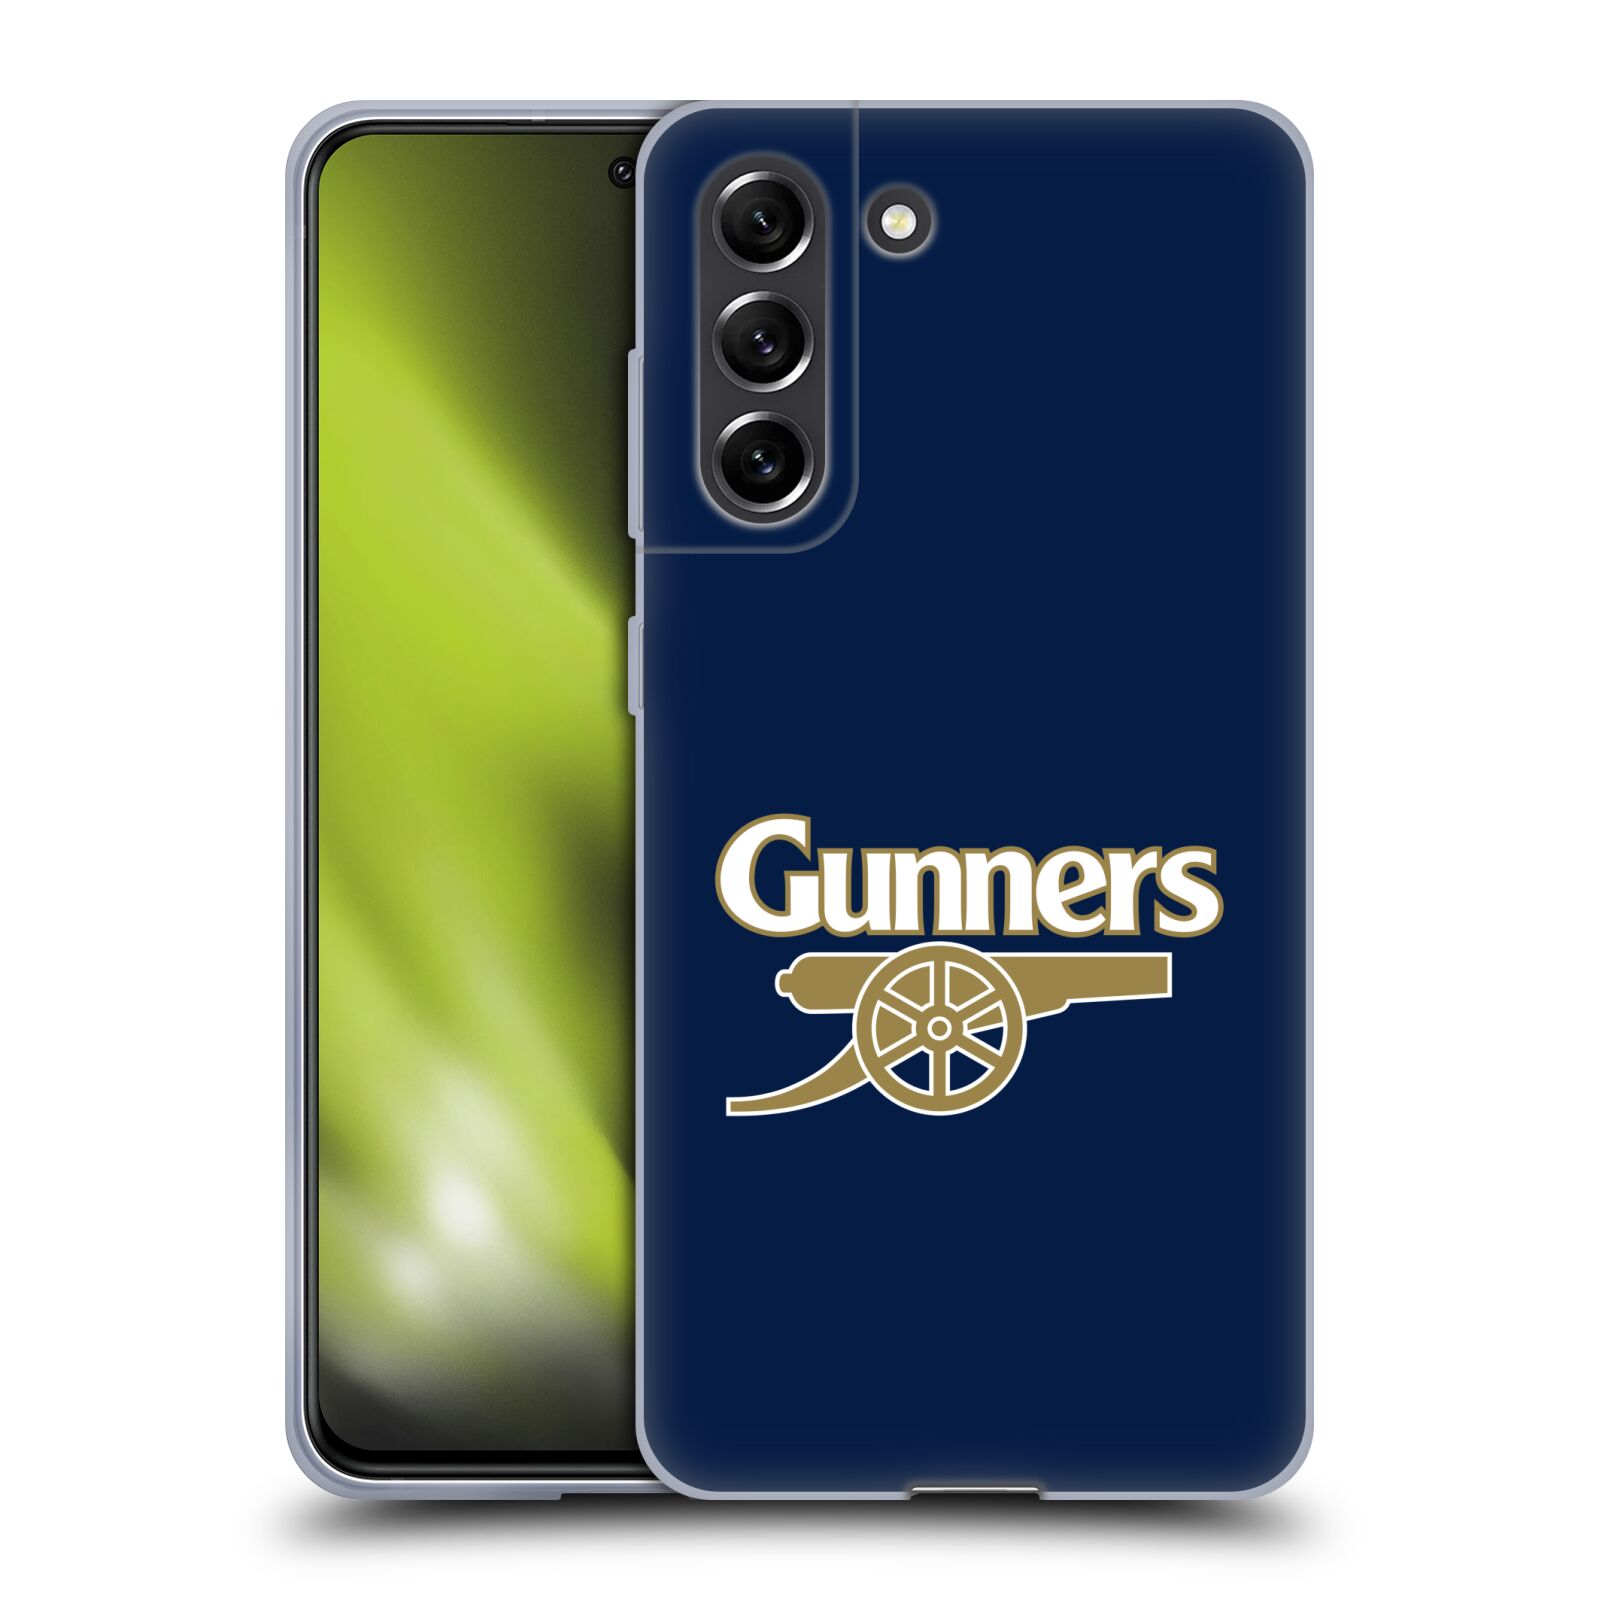 Silikonové pouzdro na mobil Samsung Galaxy S21 FE 5G - Head Case - Arsenal FC - Gunners (Silikonový kryt, obal, pouzdro na mobilní telefon s motivem klubu Arsenal FC - Gunners pro Samsung Galaxy S21 FE 5G)